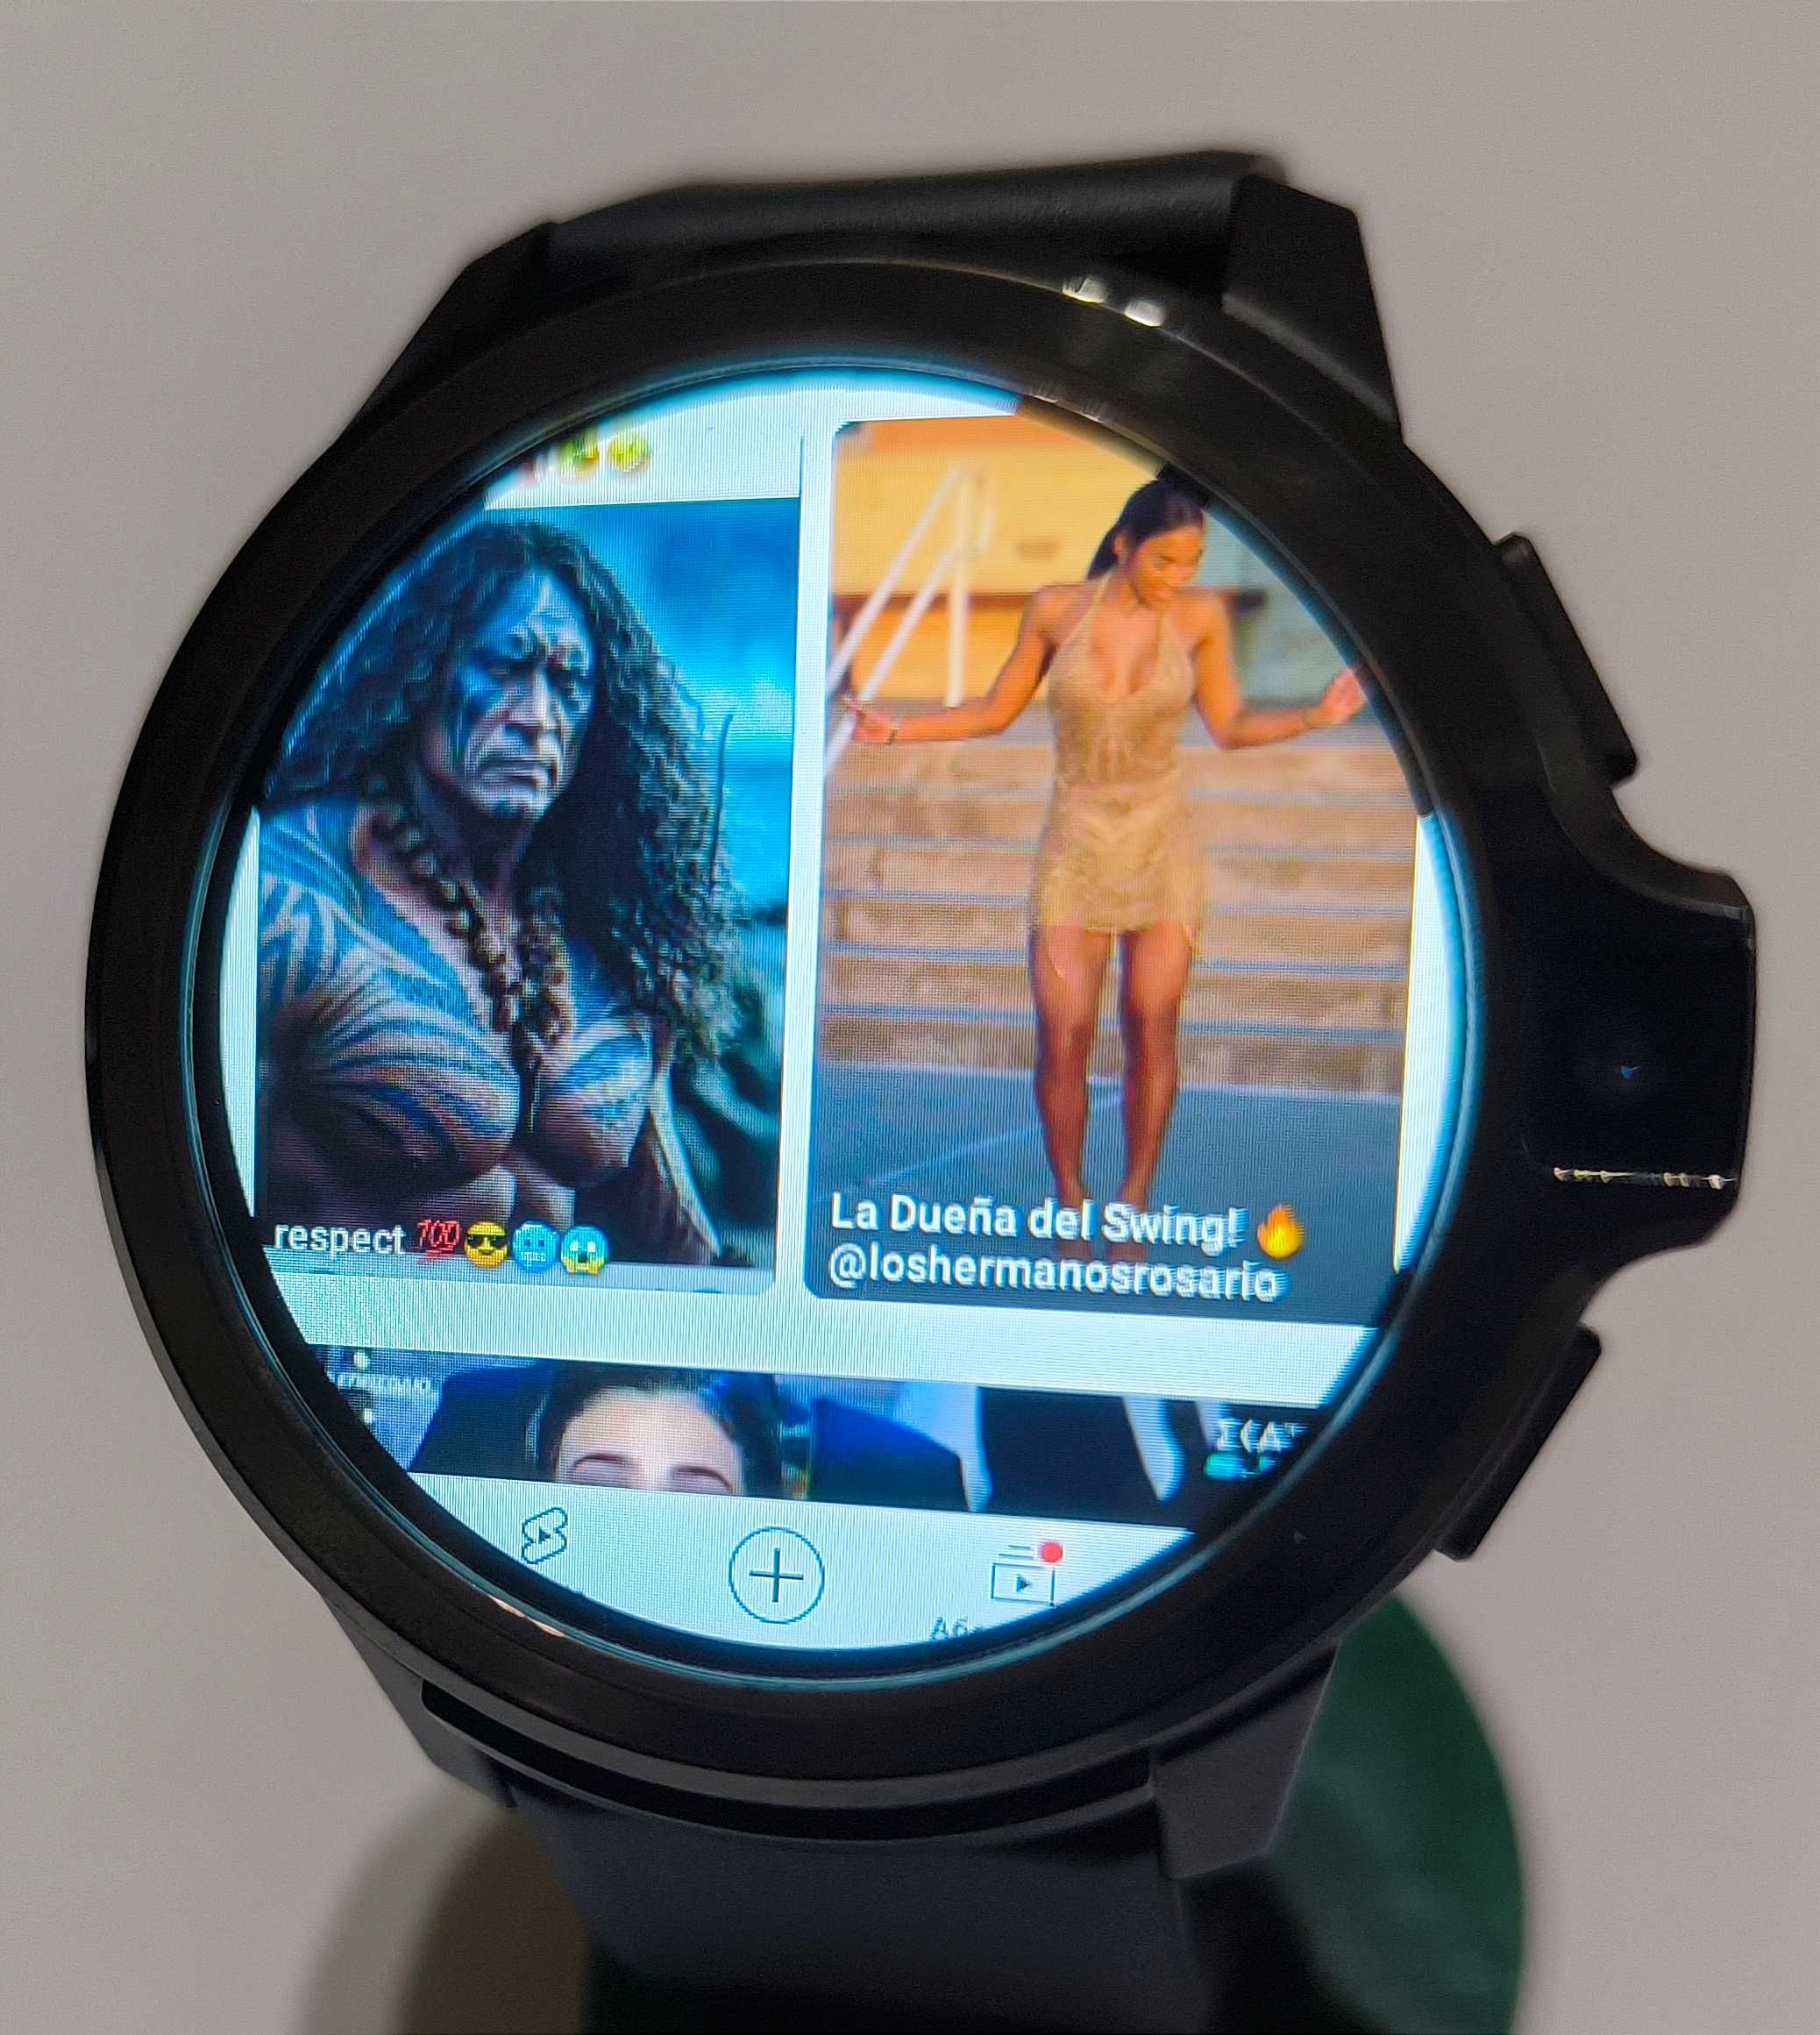 Lemfo Lemp smart watch 4G Android 9